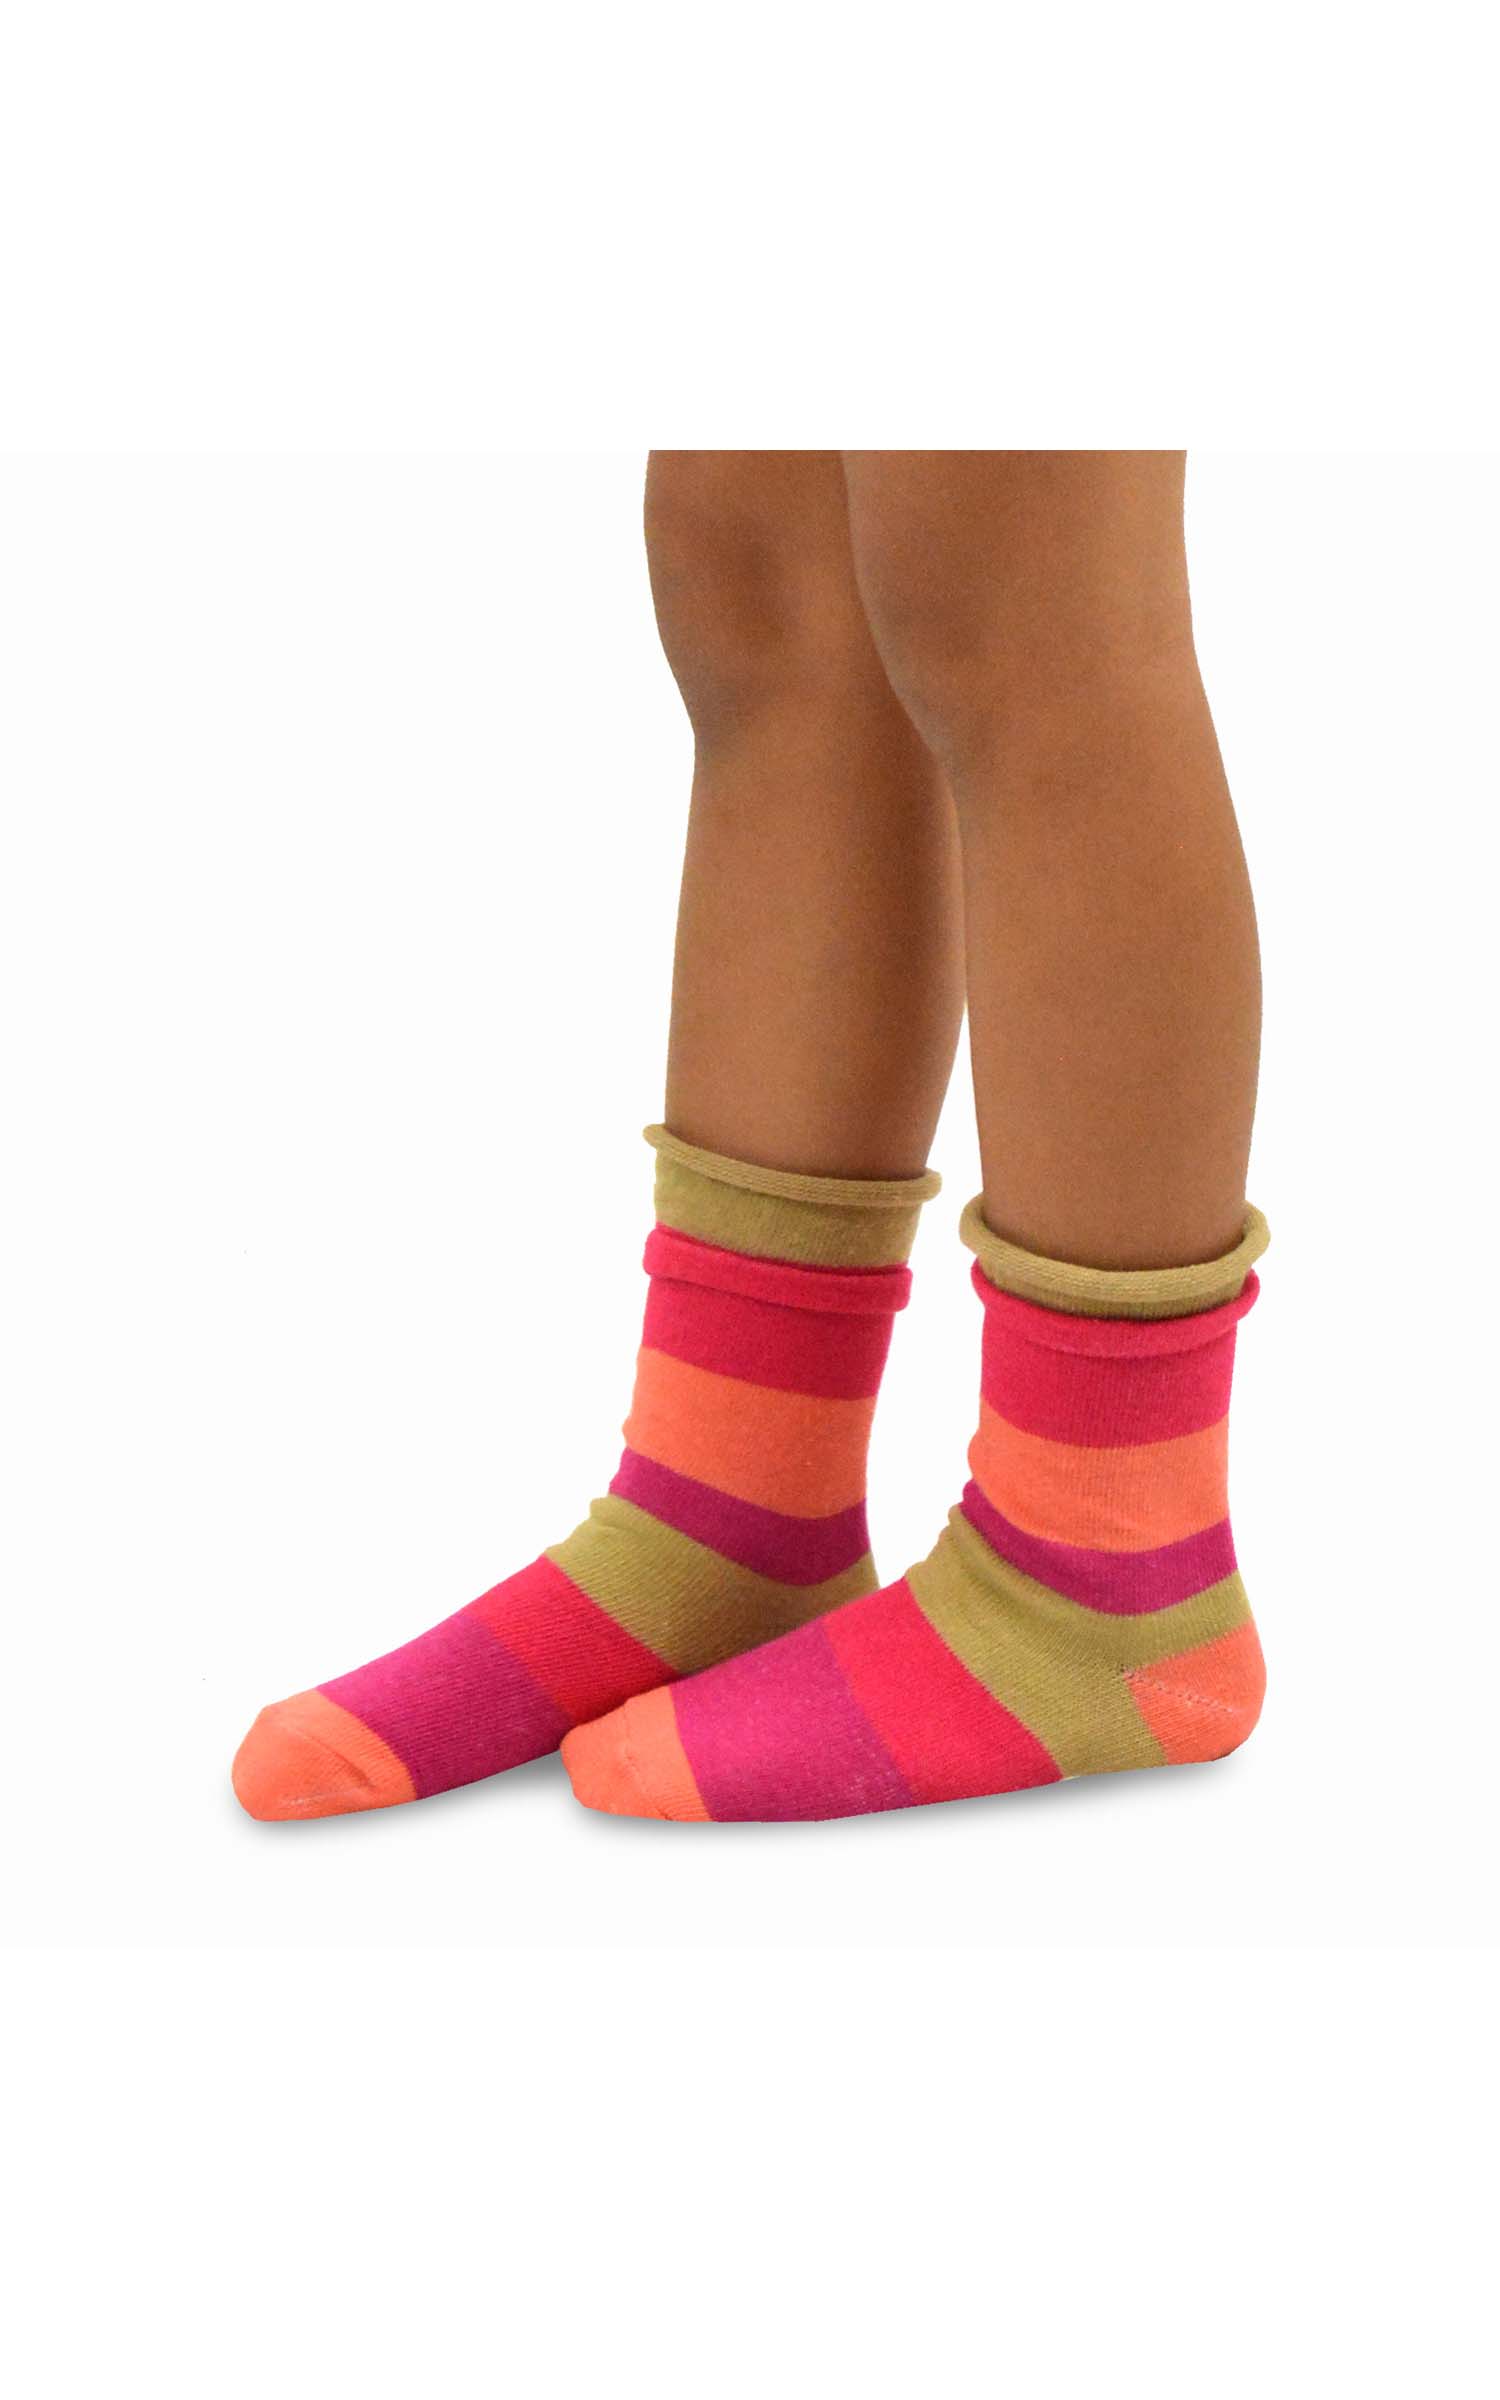 TeeHee Little Kids Girls Cotton Crew Basic Roll Top Socks 6 Pair Pack (9-10 Years, Indian Stripe) - image 4 of 7